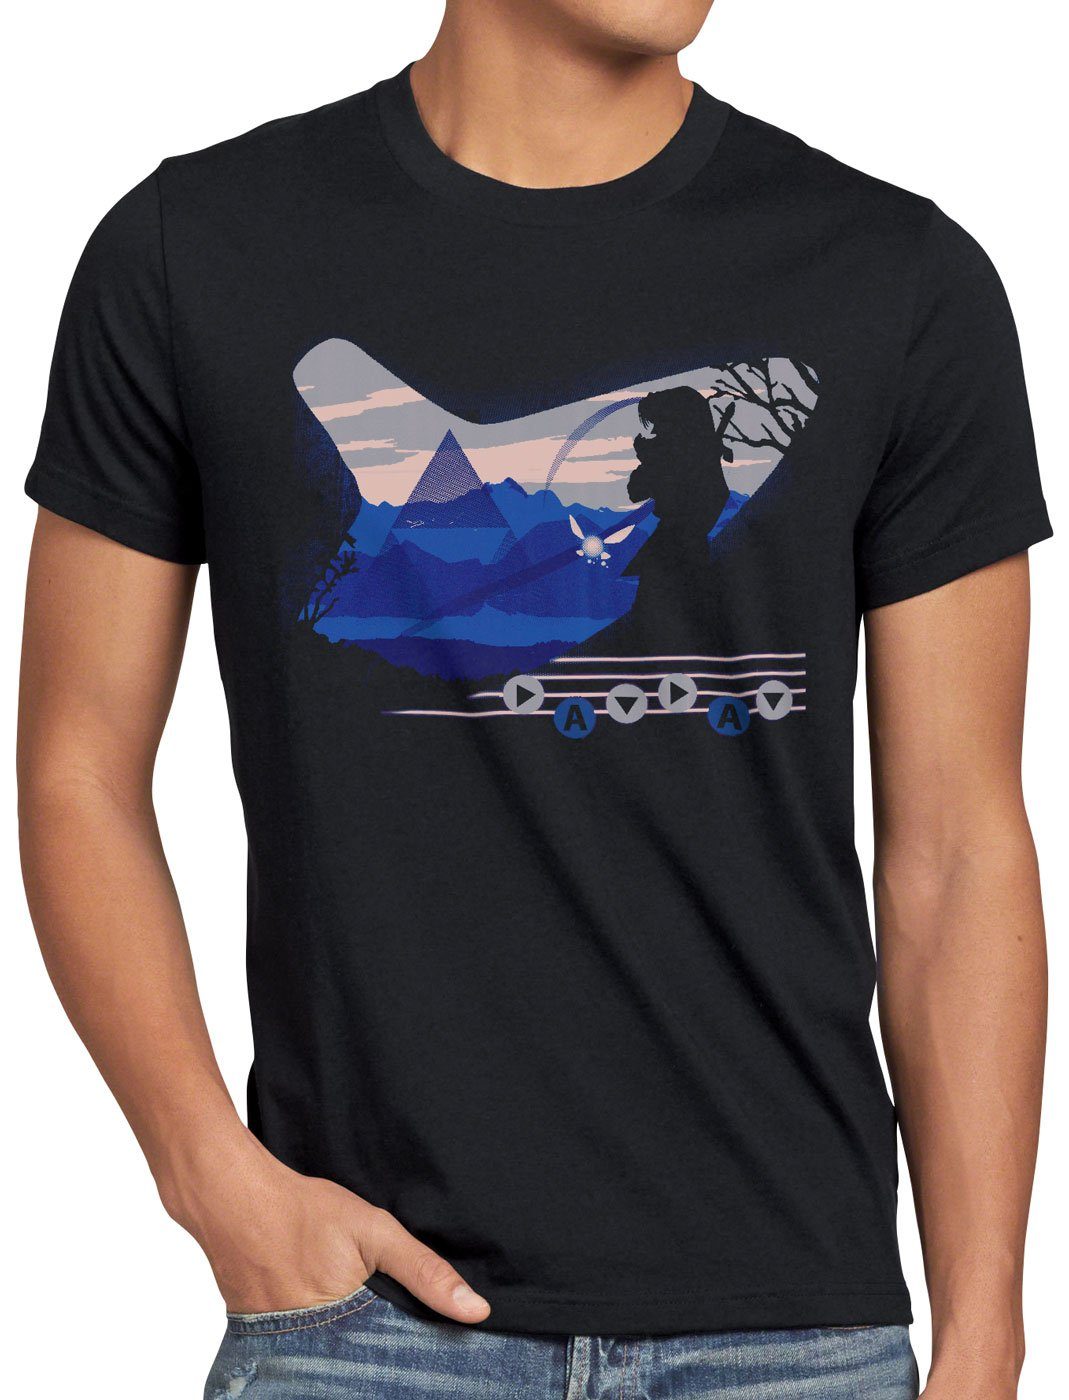 style3 link Print-Shirt Herren Dream epona n64 Ocarina T-Shirt